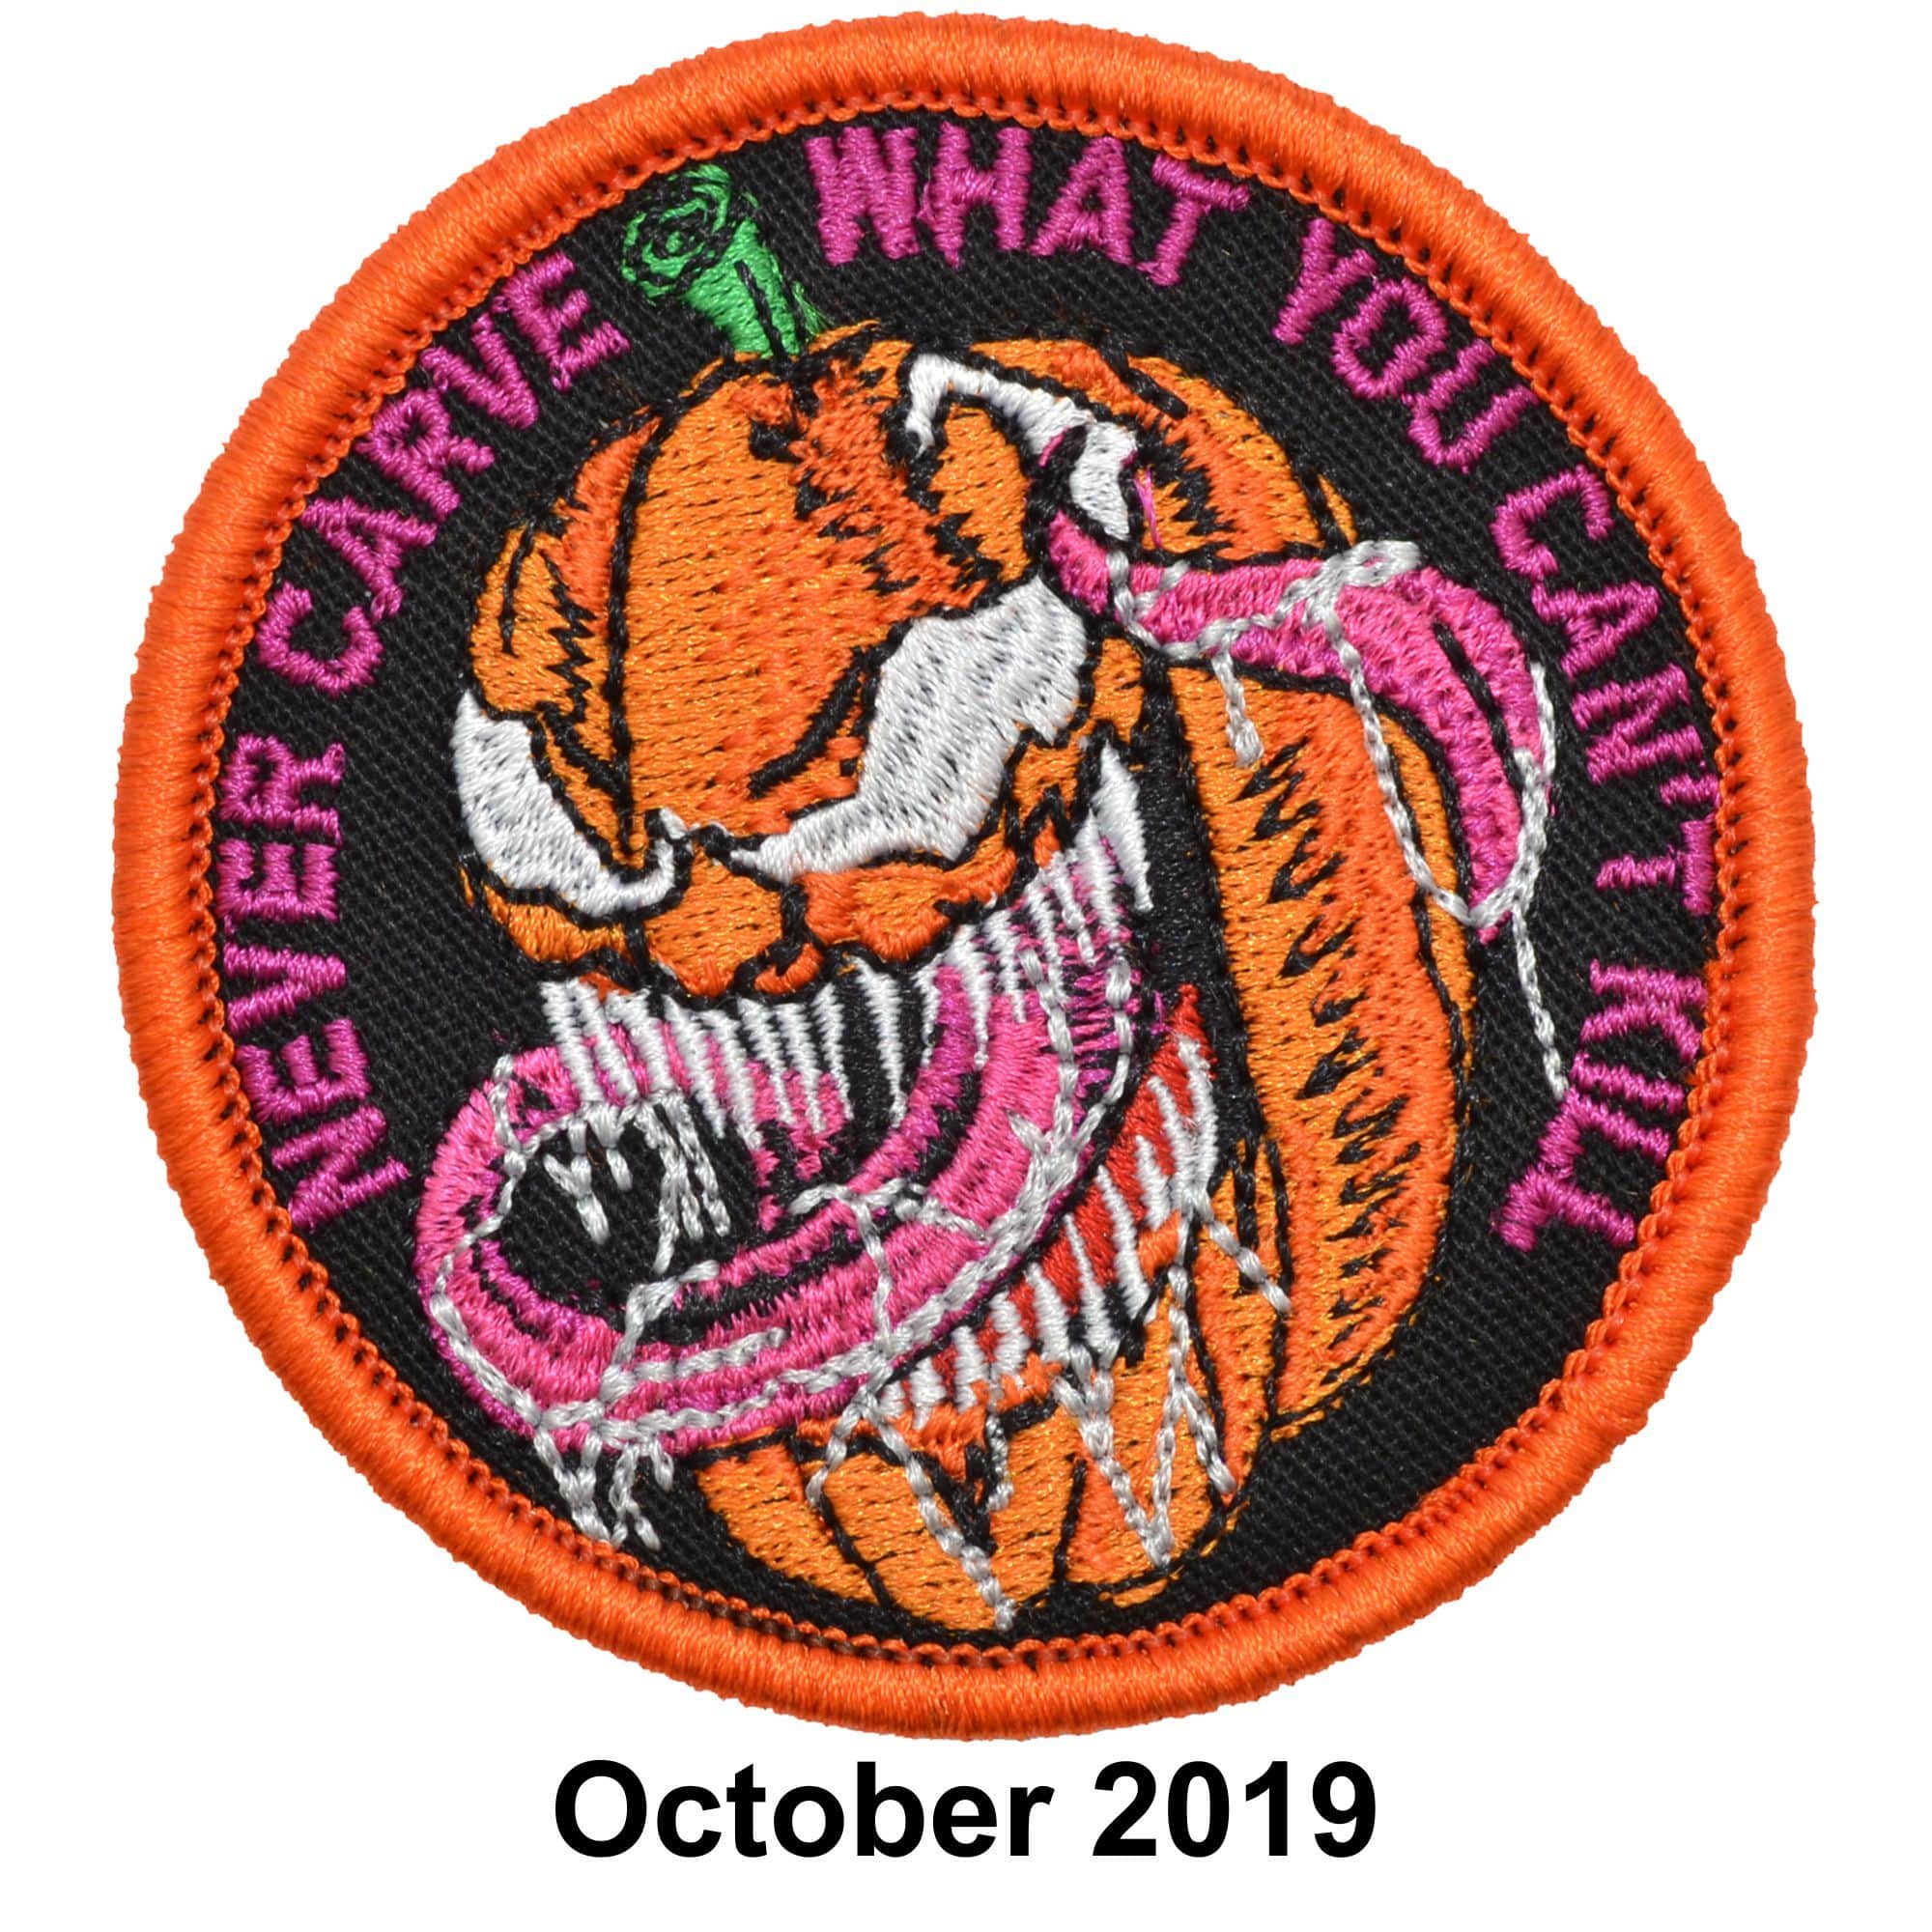 October 2019 Patch of the Month - Venom Jack-o-lantern